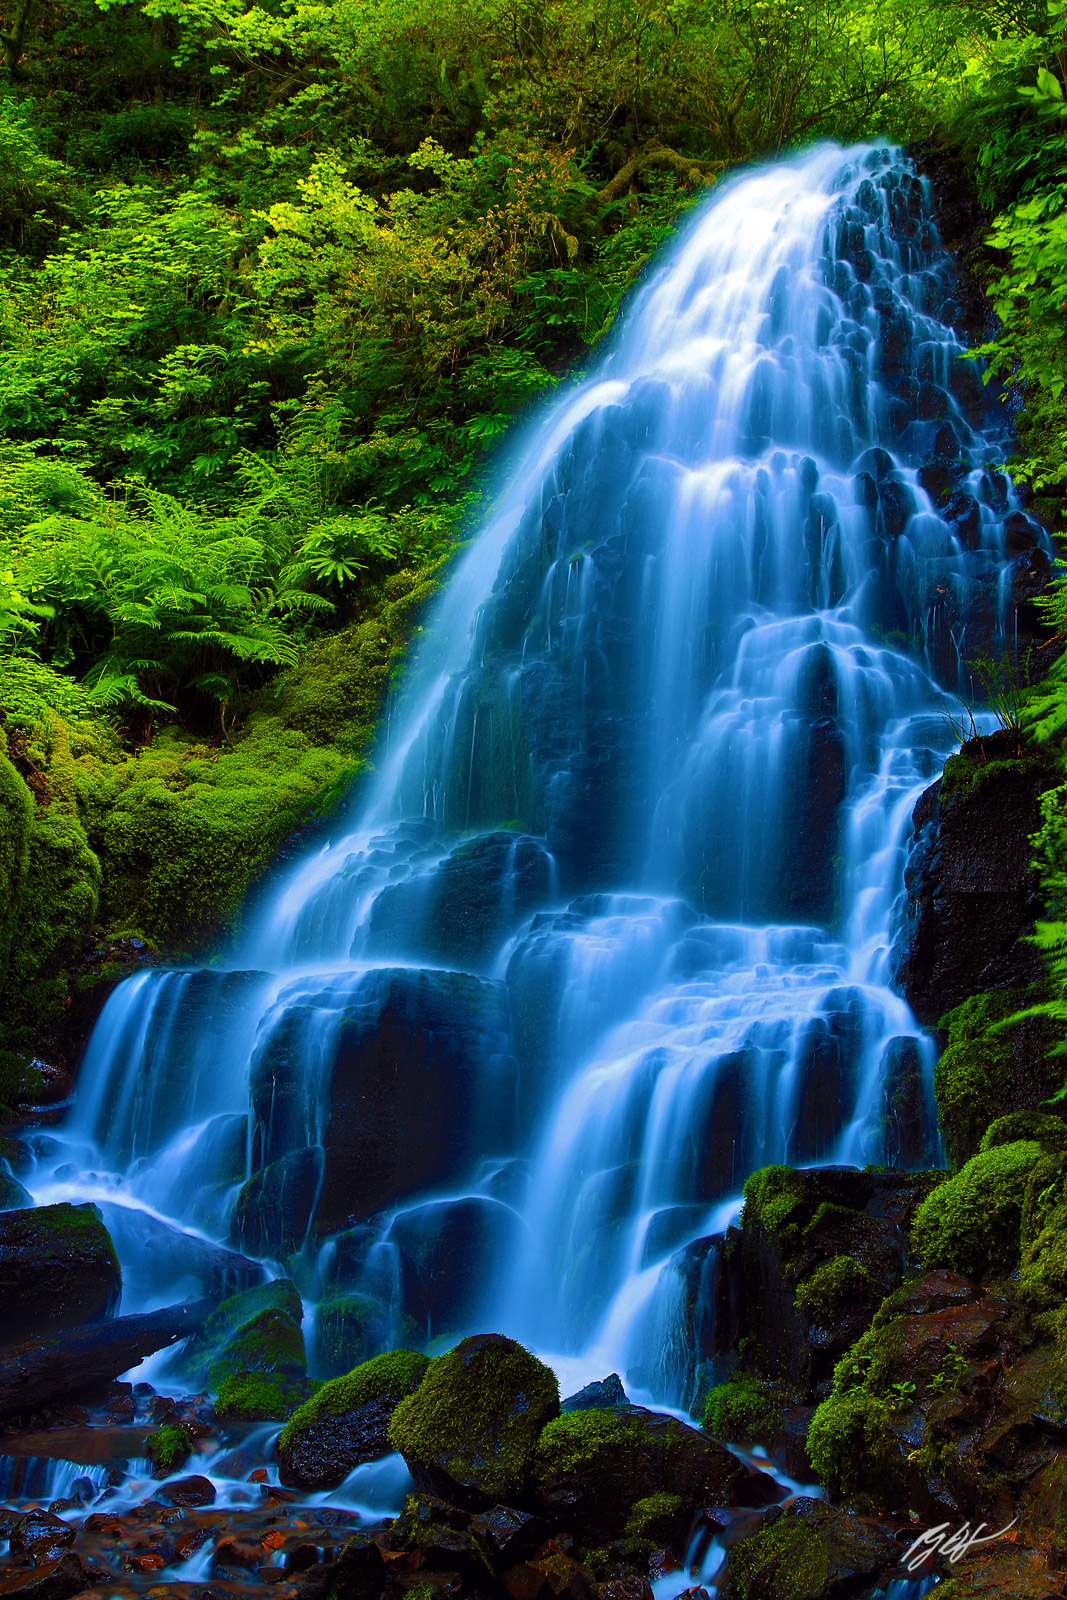 Fairy Falls in the Columbia River Gorge National Scenic Area in Oregon